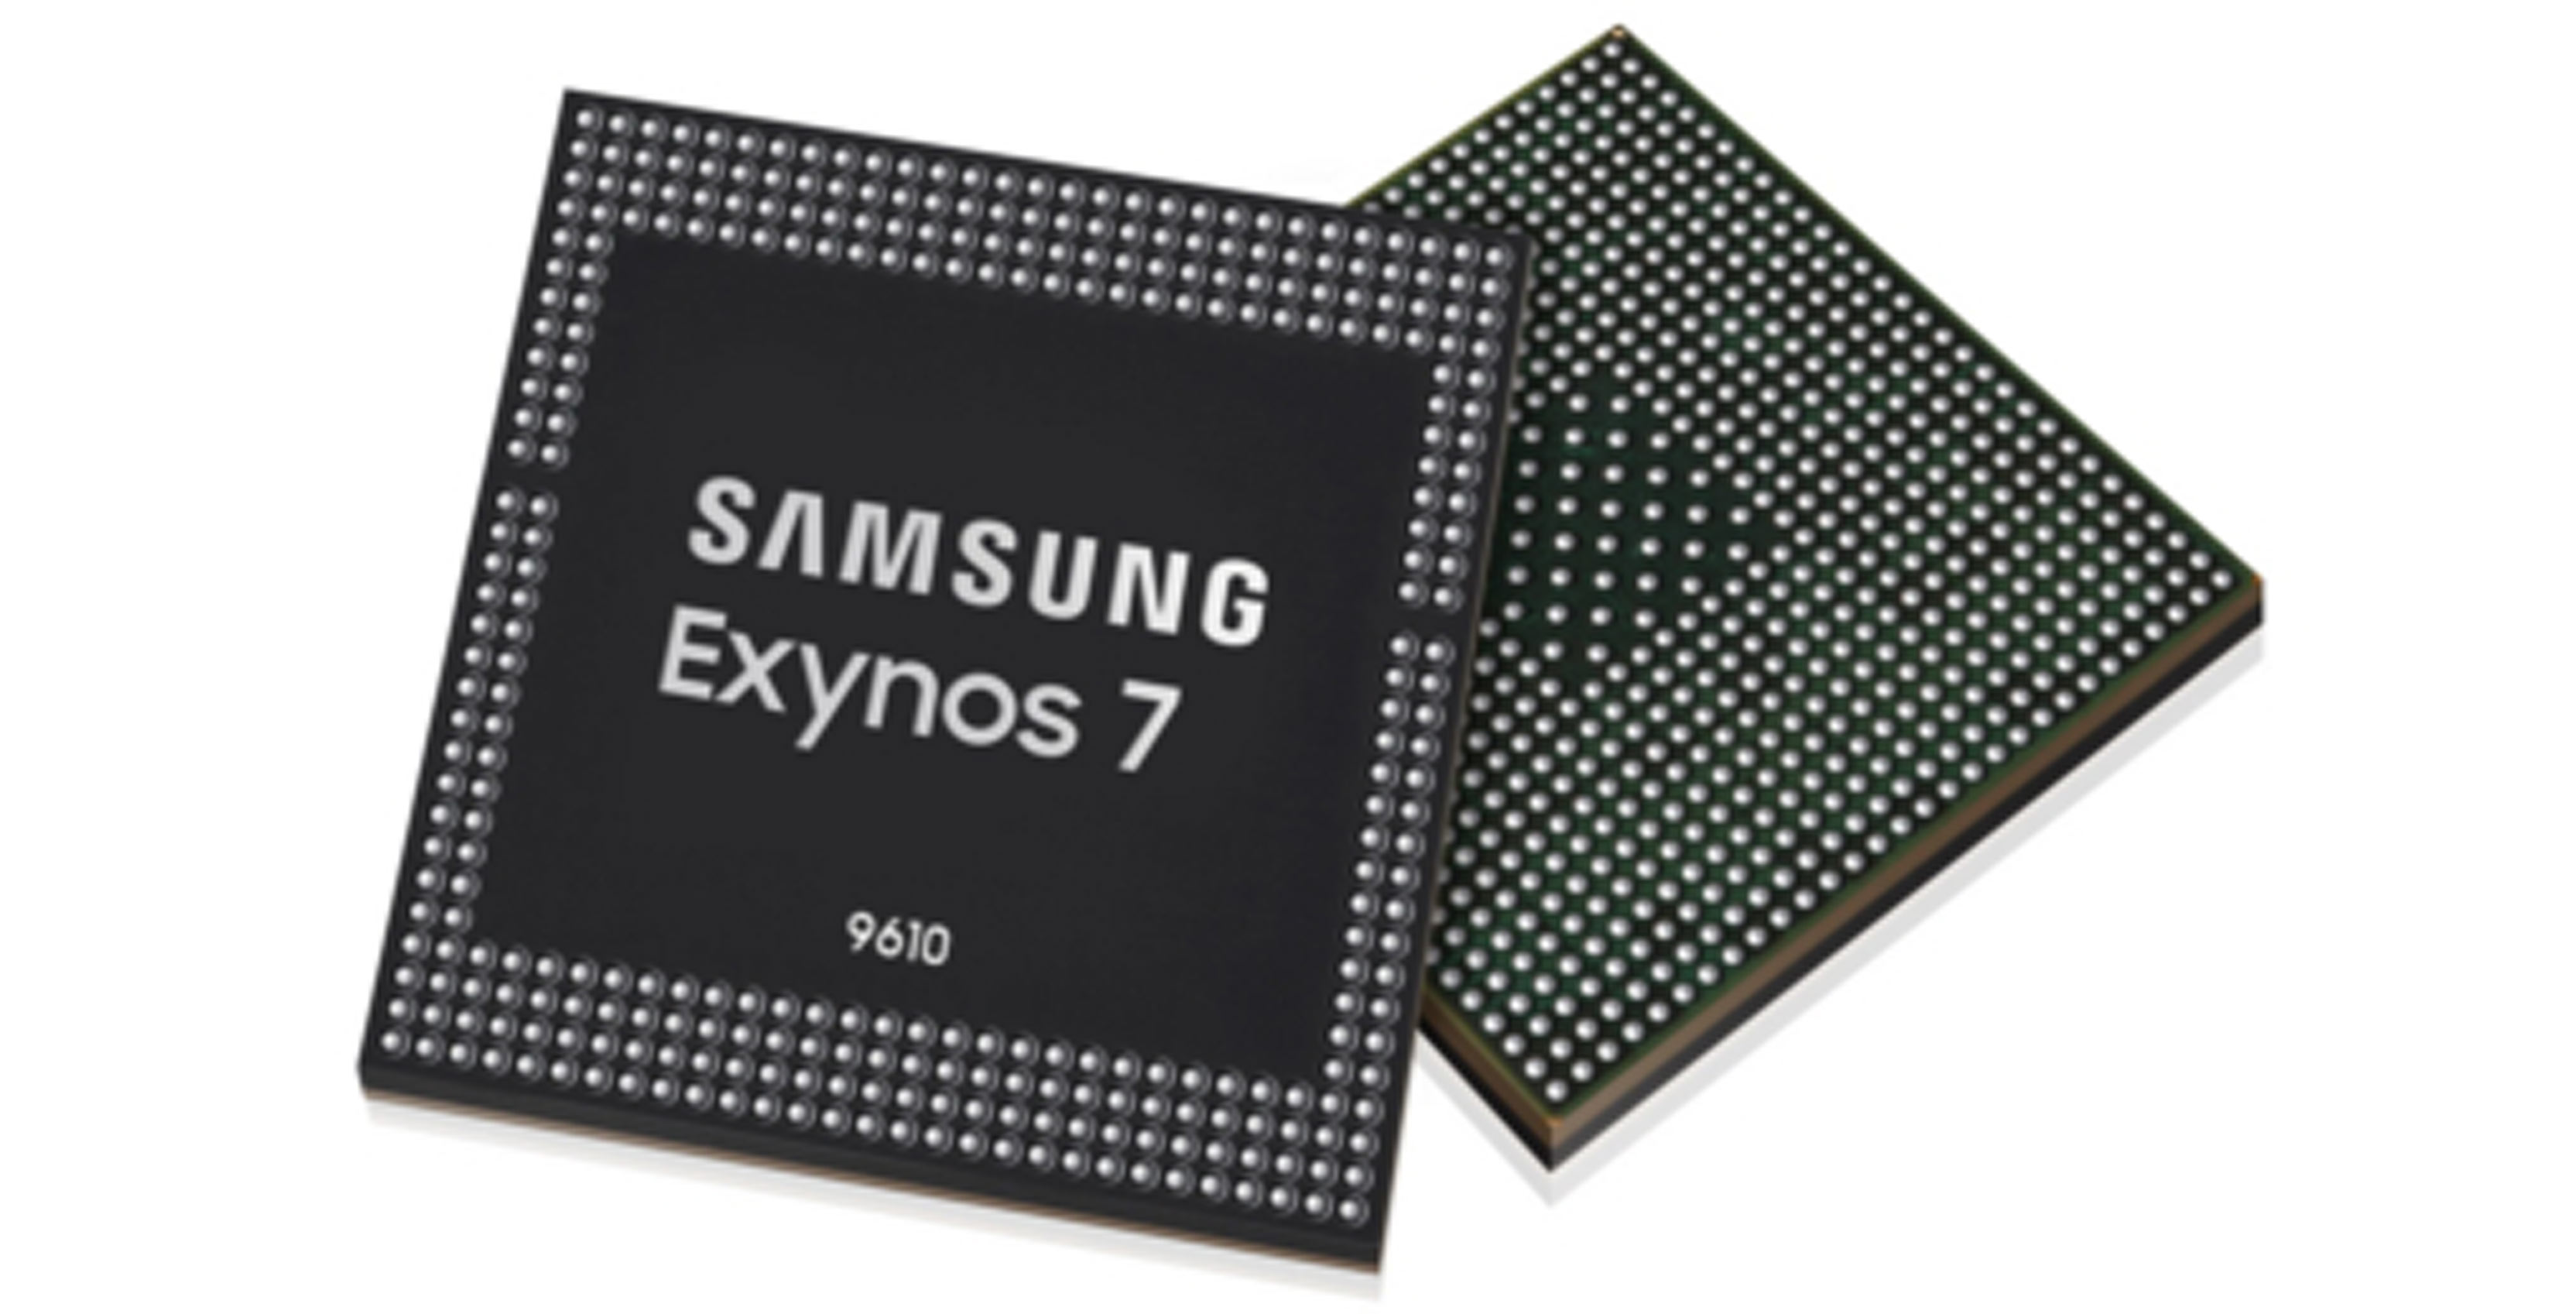 Samsung's new mid-range Exynos 9610 chipset